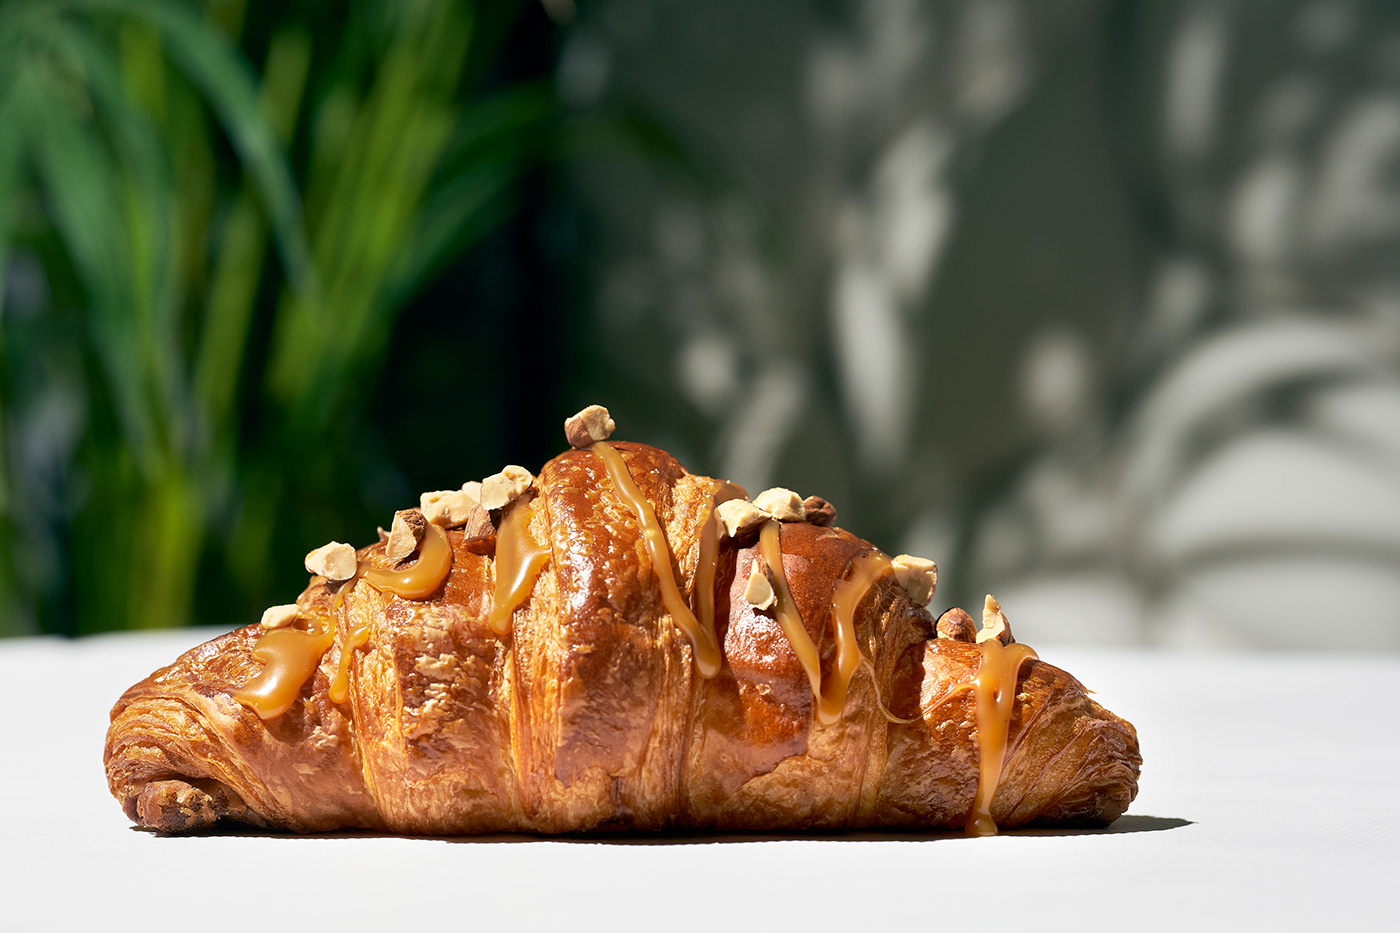 bakery breakfast closeup croissant dessert pastries pastry photo retouch